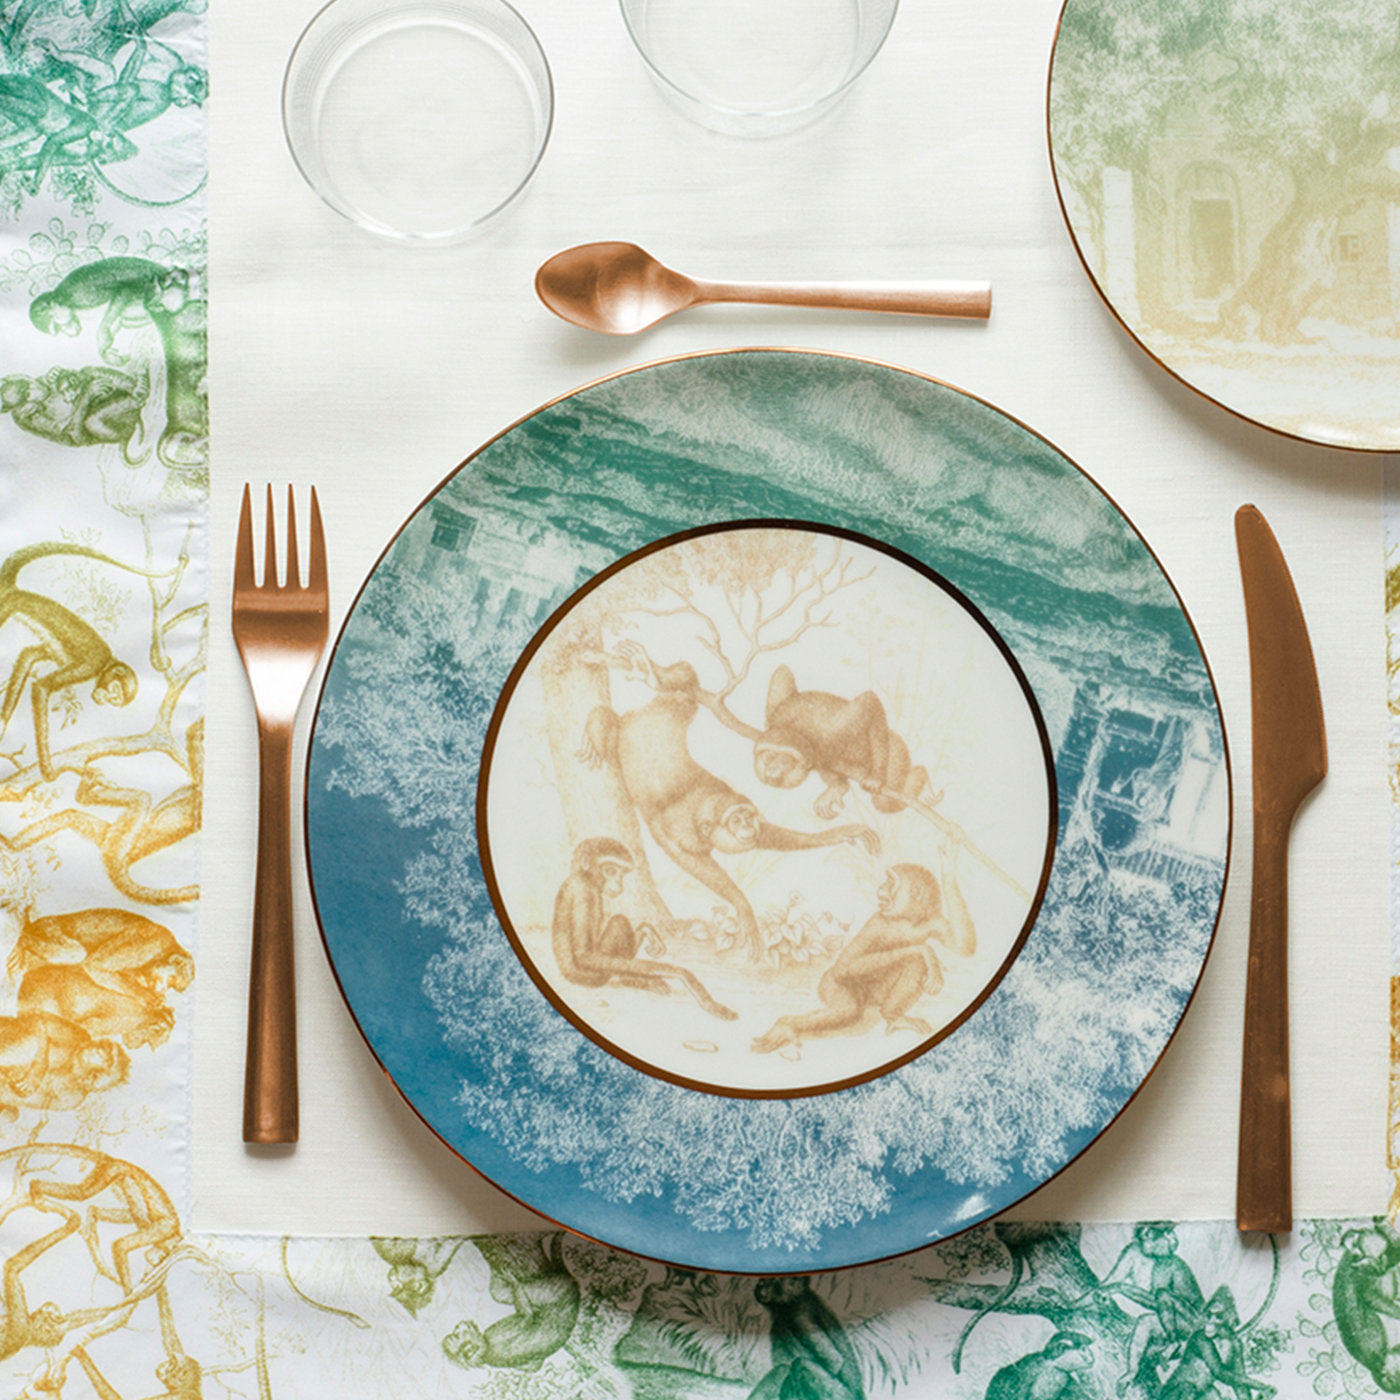 Galtaji Porcelain Dinner Plate With Landscape And Monkeys #1 - Alternative view 1